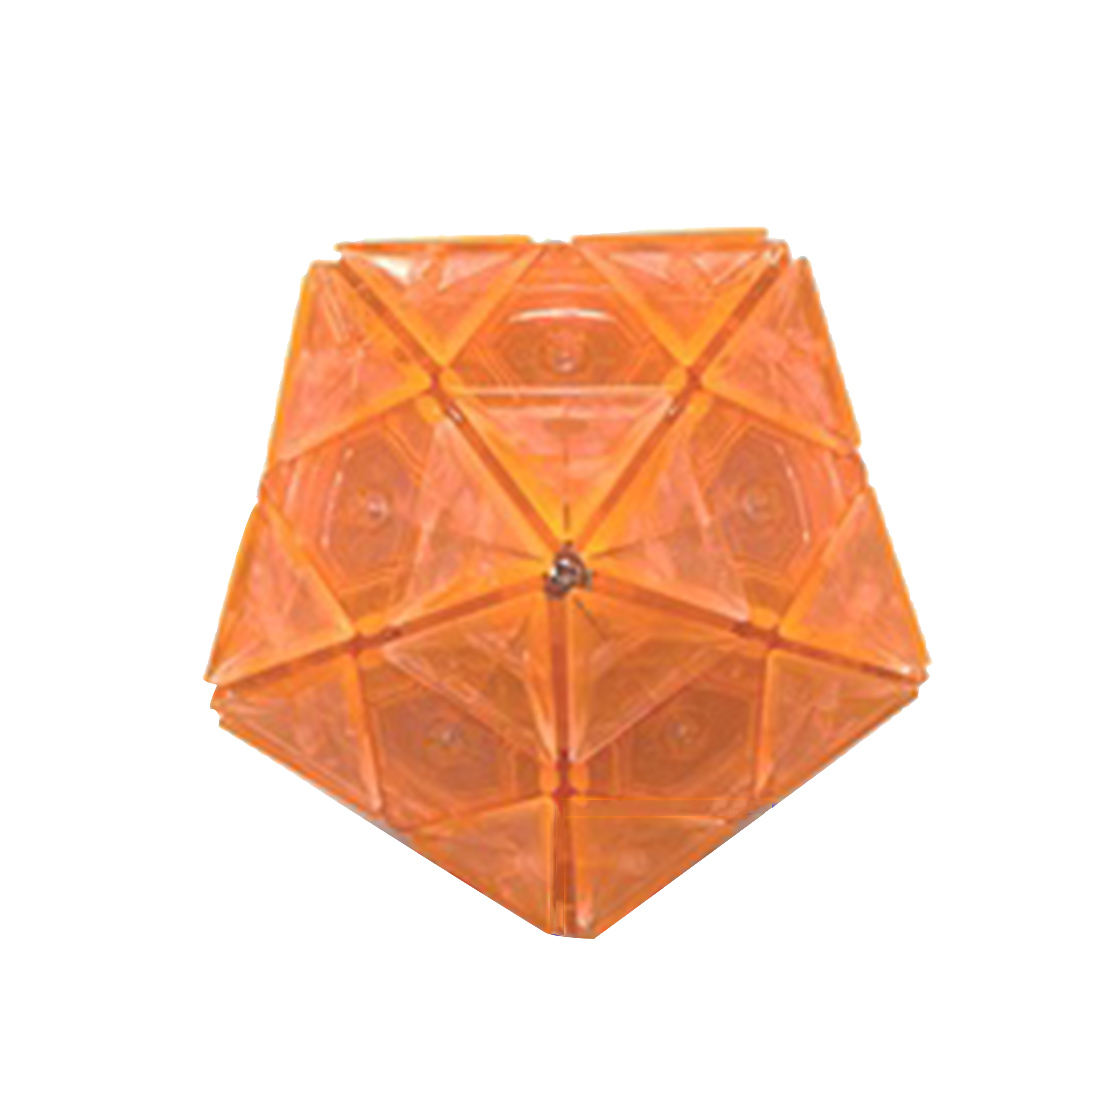 Calvin's Icosahedron Carousel Magic Cube (Ice Orange/Limited Edition)